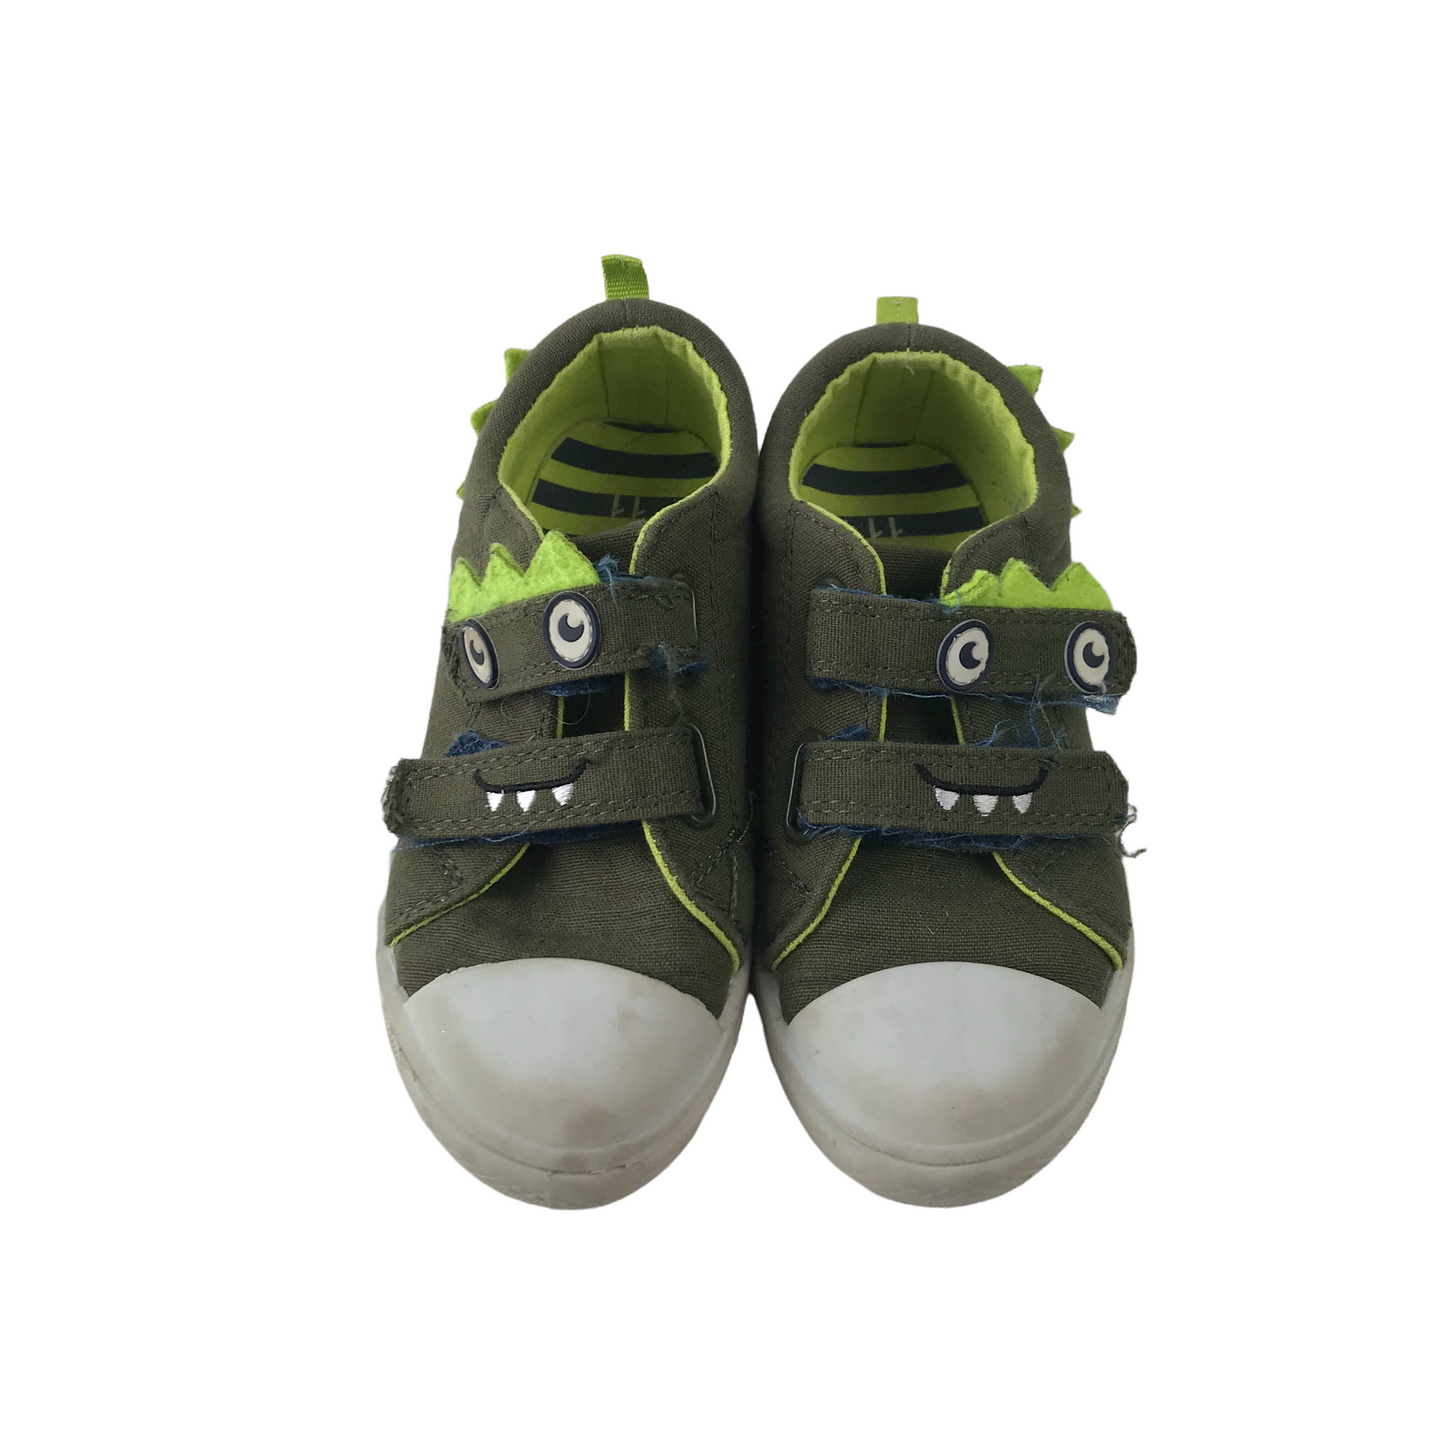 Tu Khaki Green Crocodile Trainers with Straps Shoe Size 11 (jr)